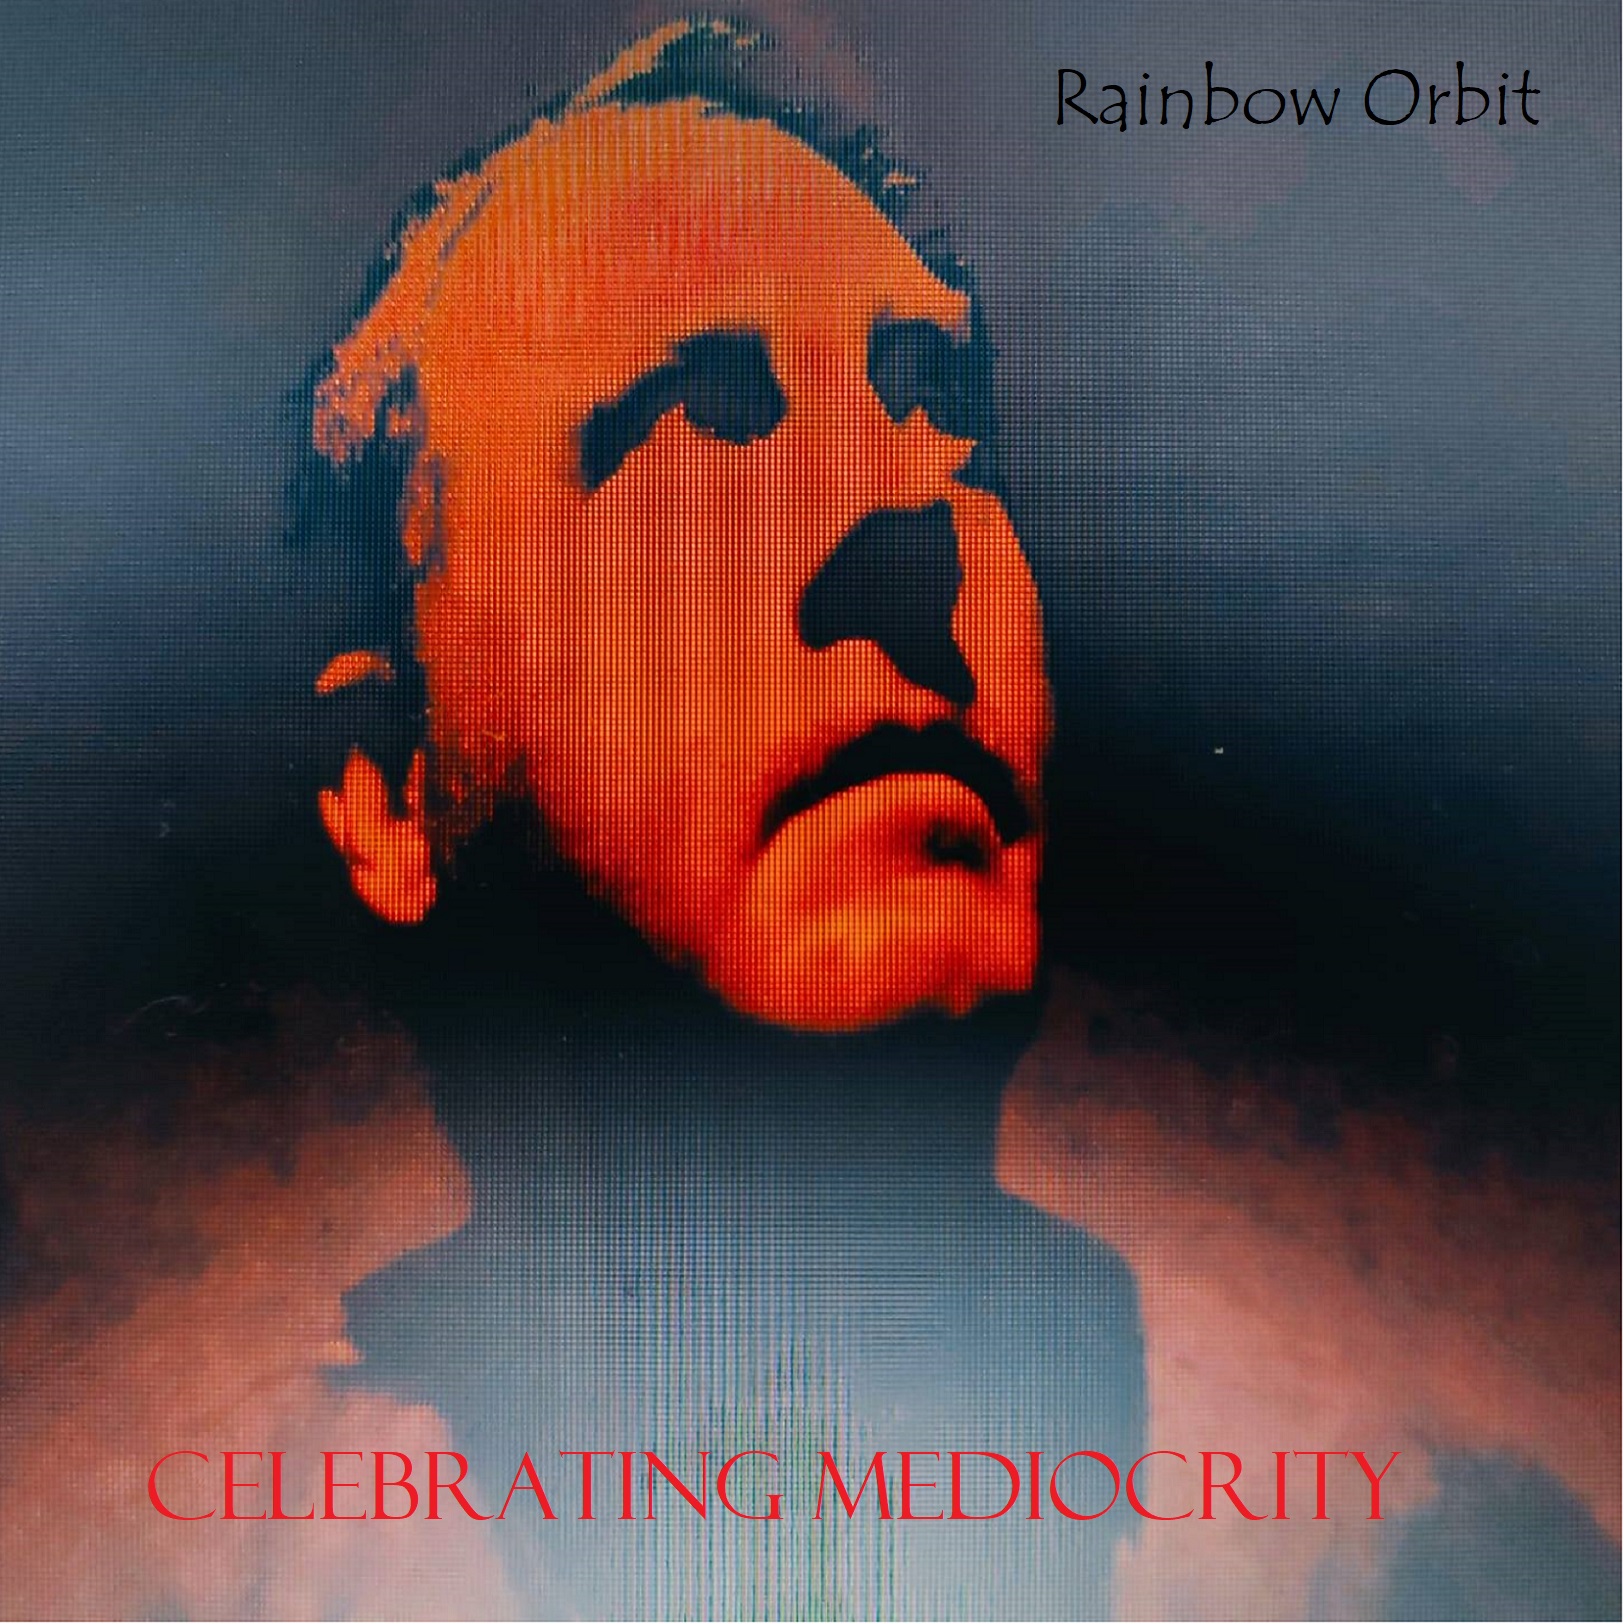 Rainbow Orbit — Celebrating Mediocrity cover artwork